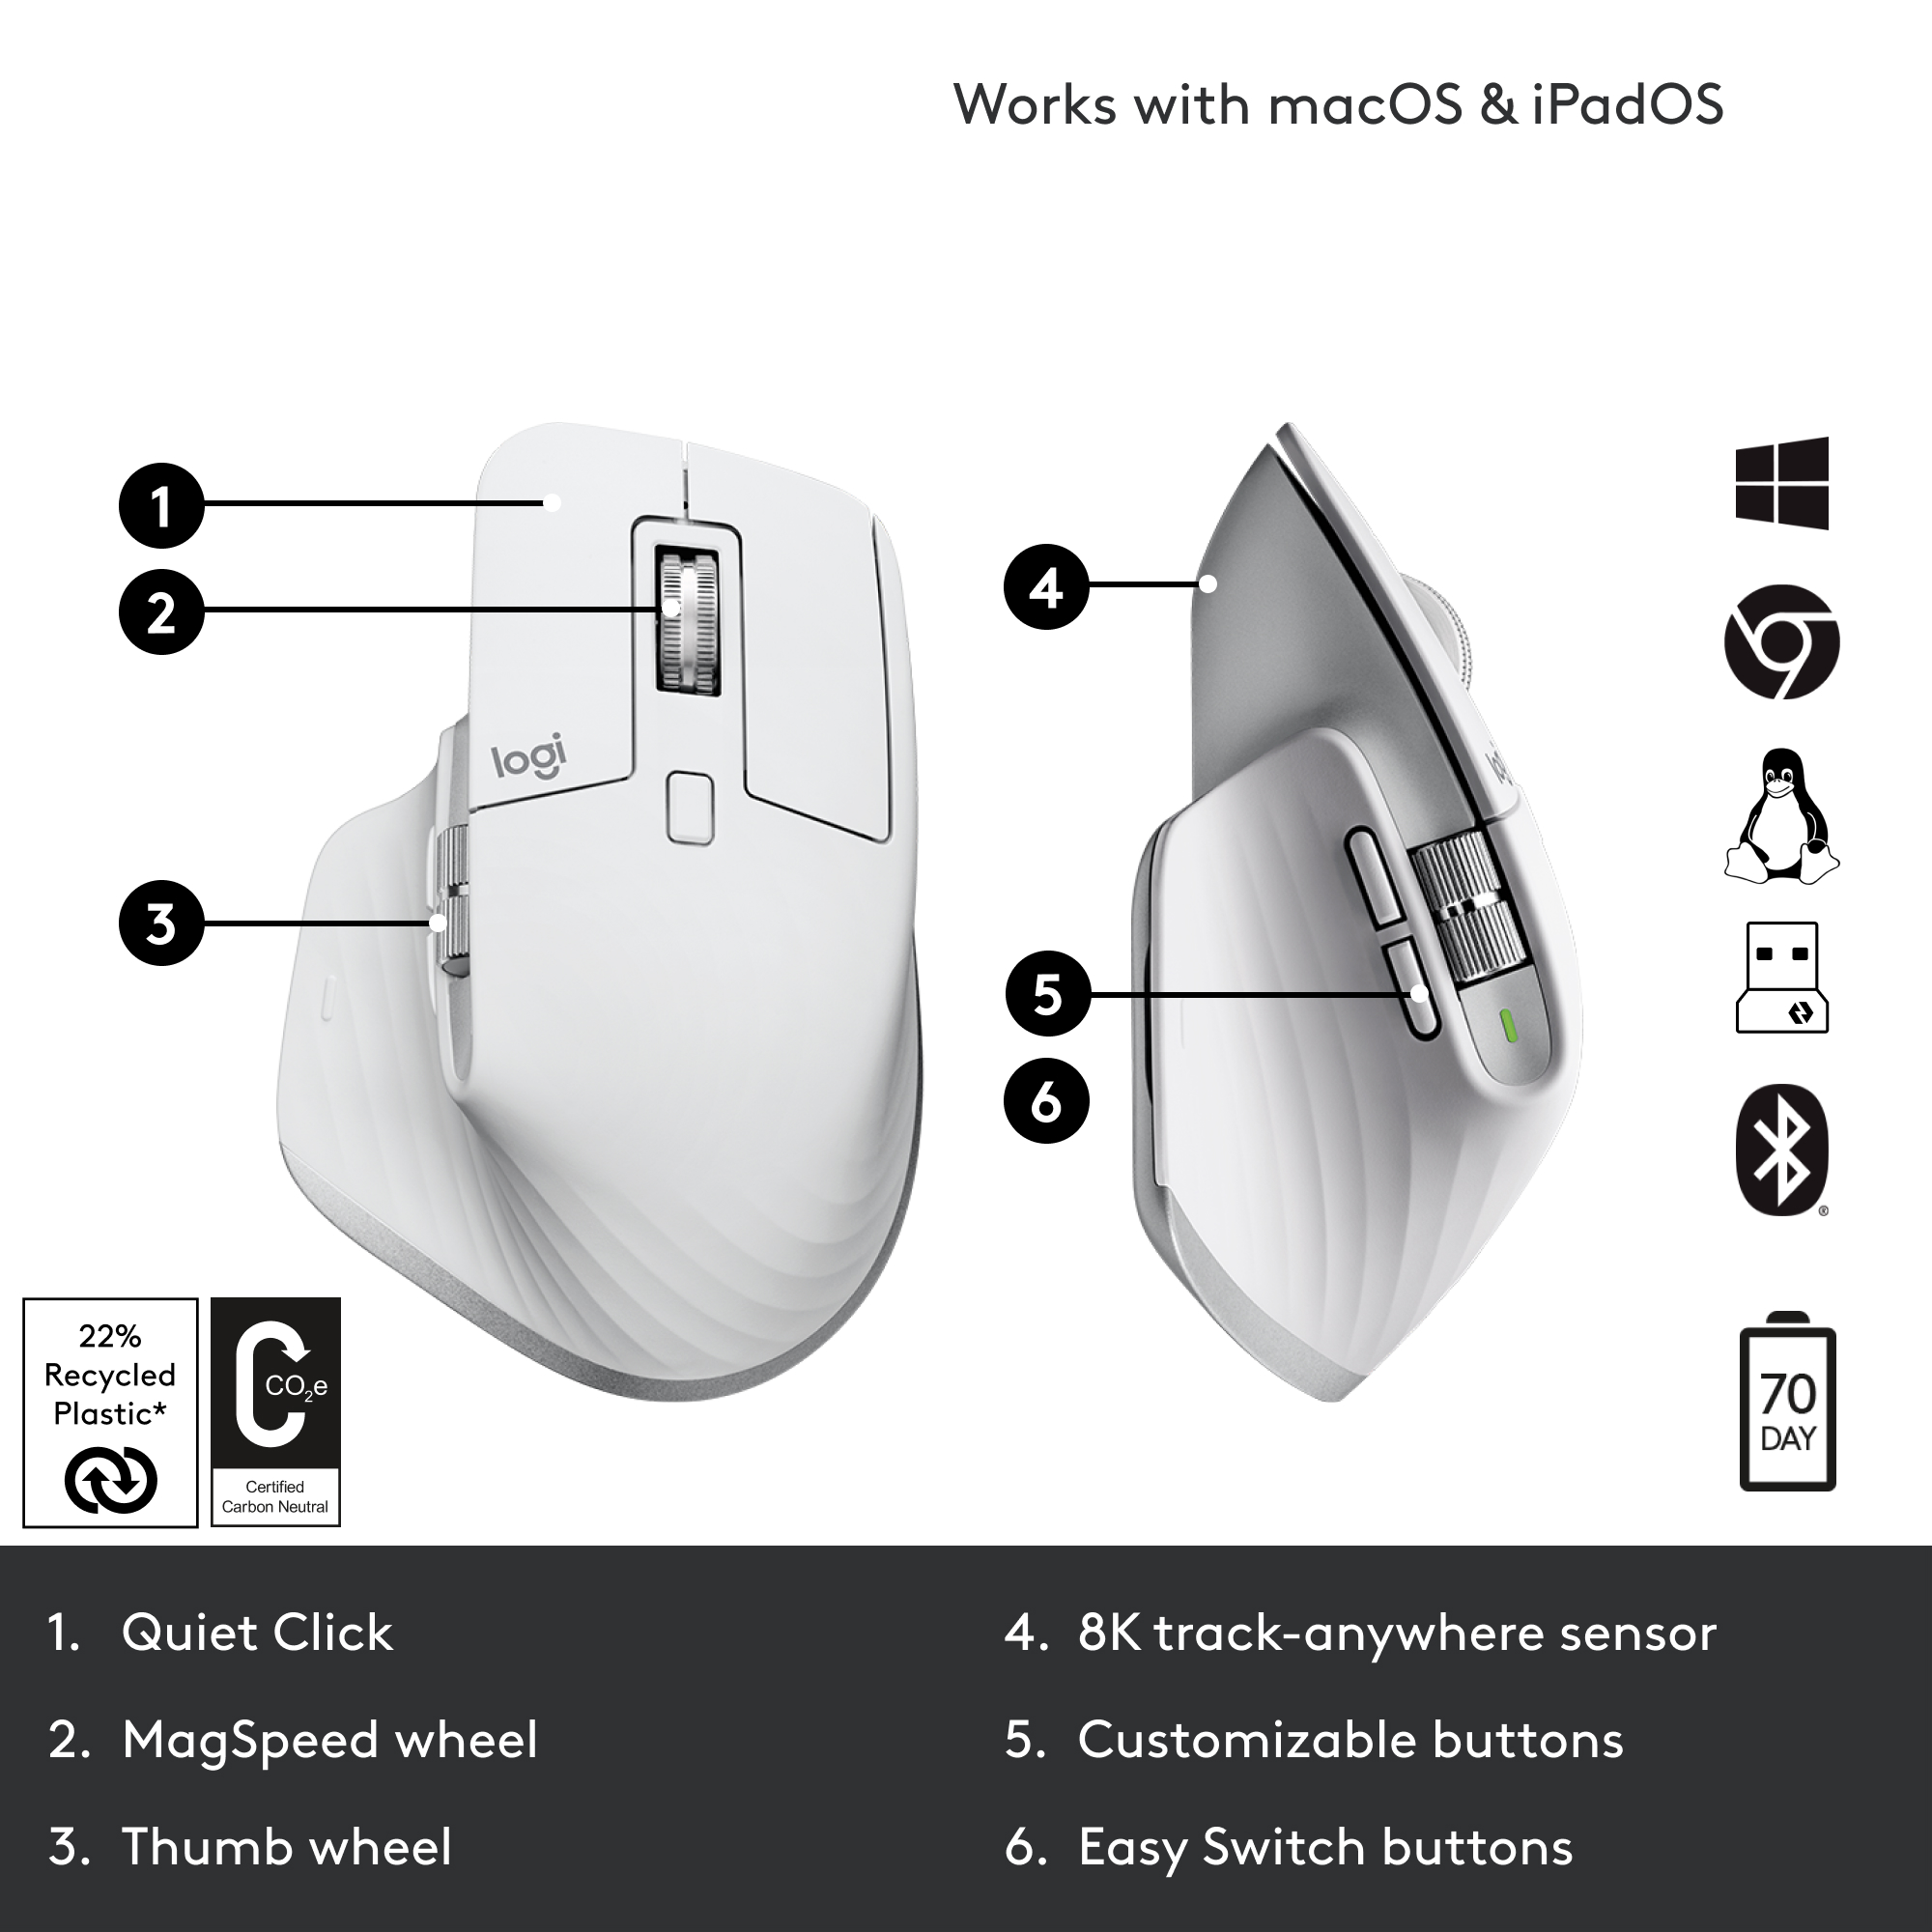 Logitech MX Master 3S Wireless Mouse - Black for sale online